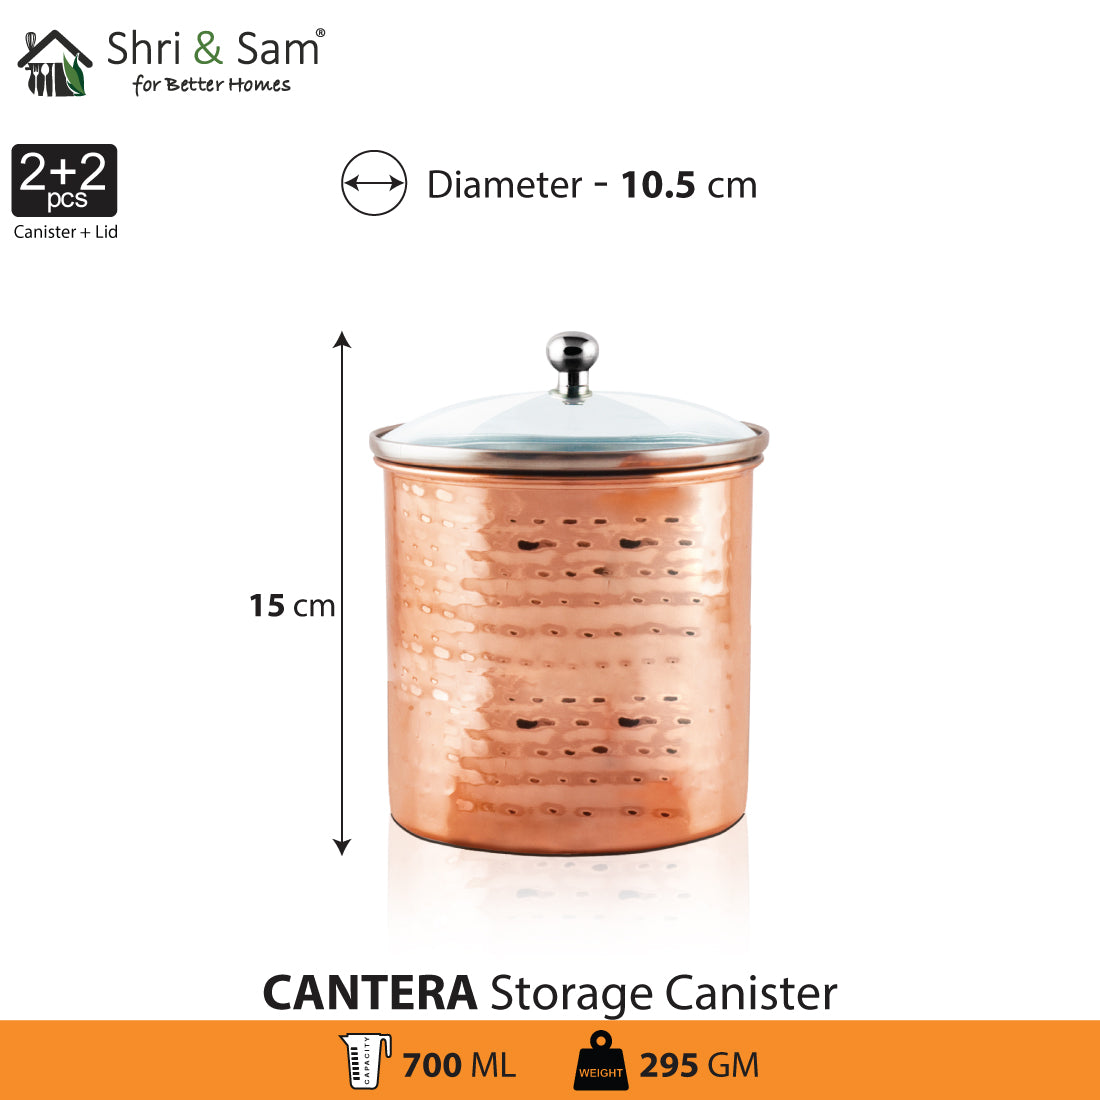 Jagdamba Cutlery Pvt Ltd. Serveware 2PCS - 700ML Storage Canister with air tight glass lid - Cantera